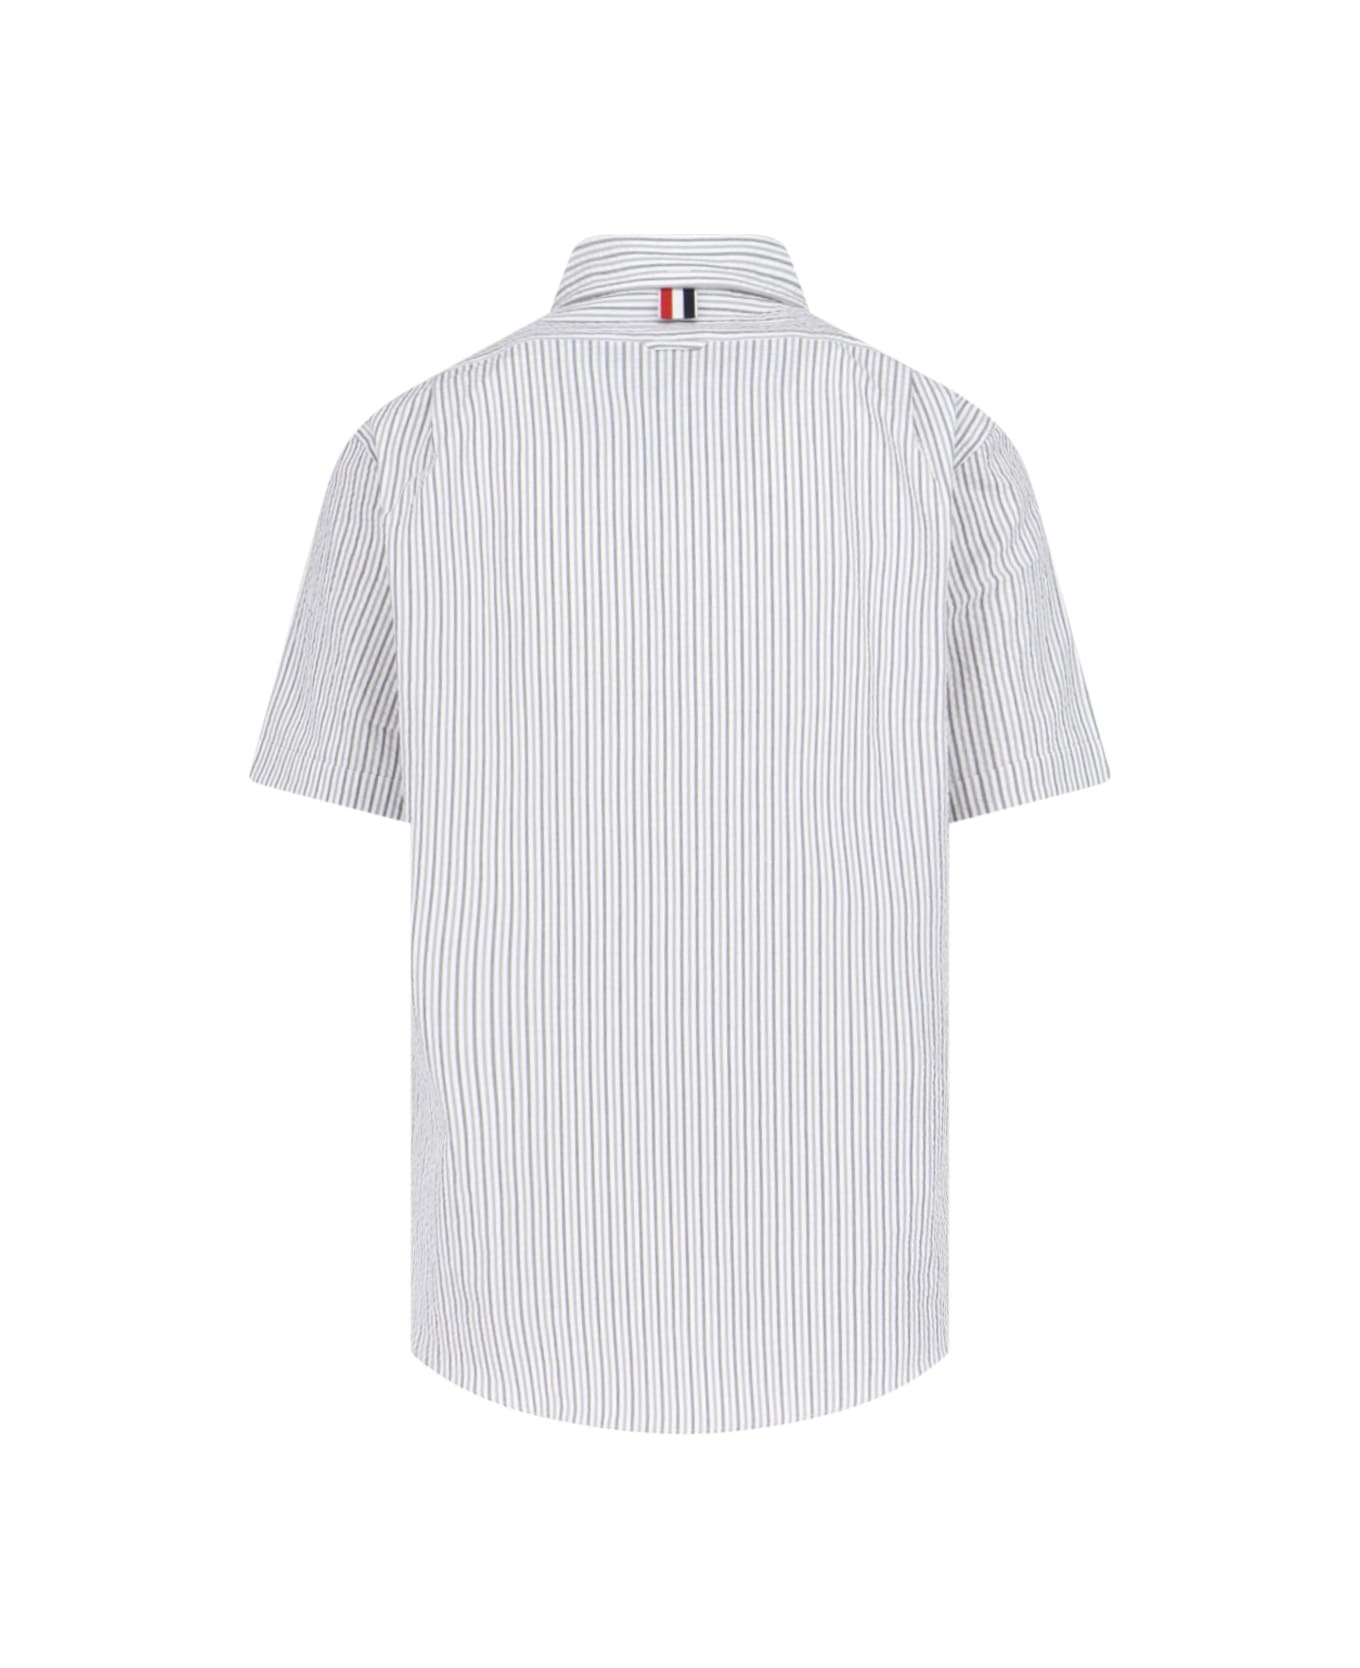 Thom Browne Shirt - Silver